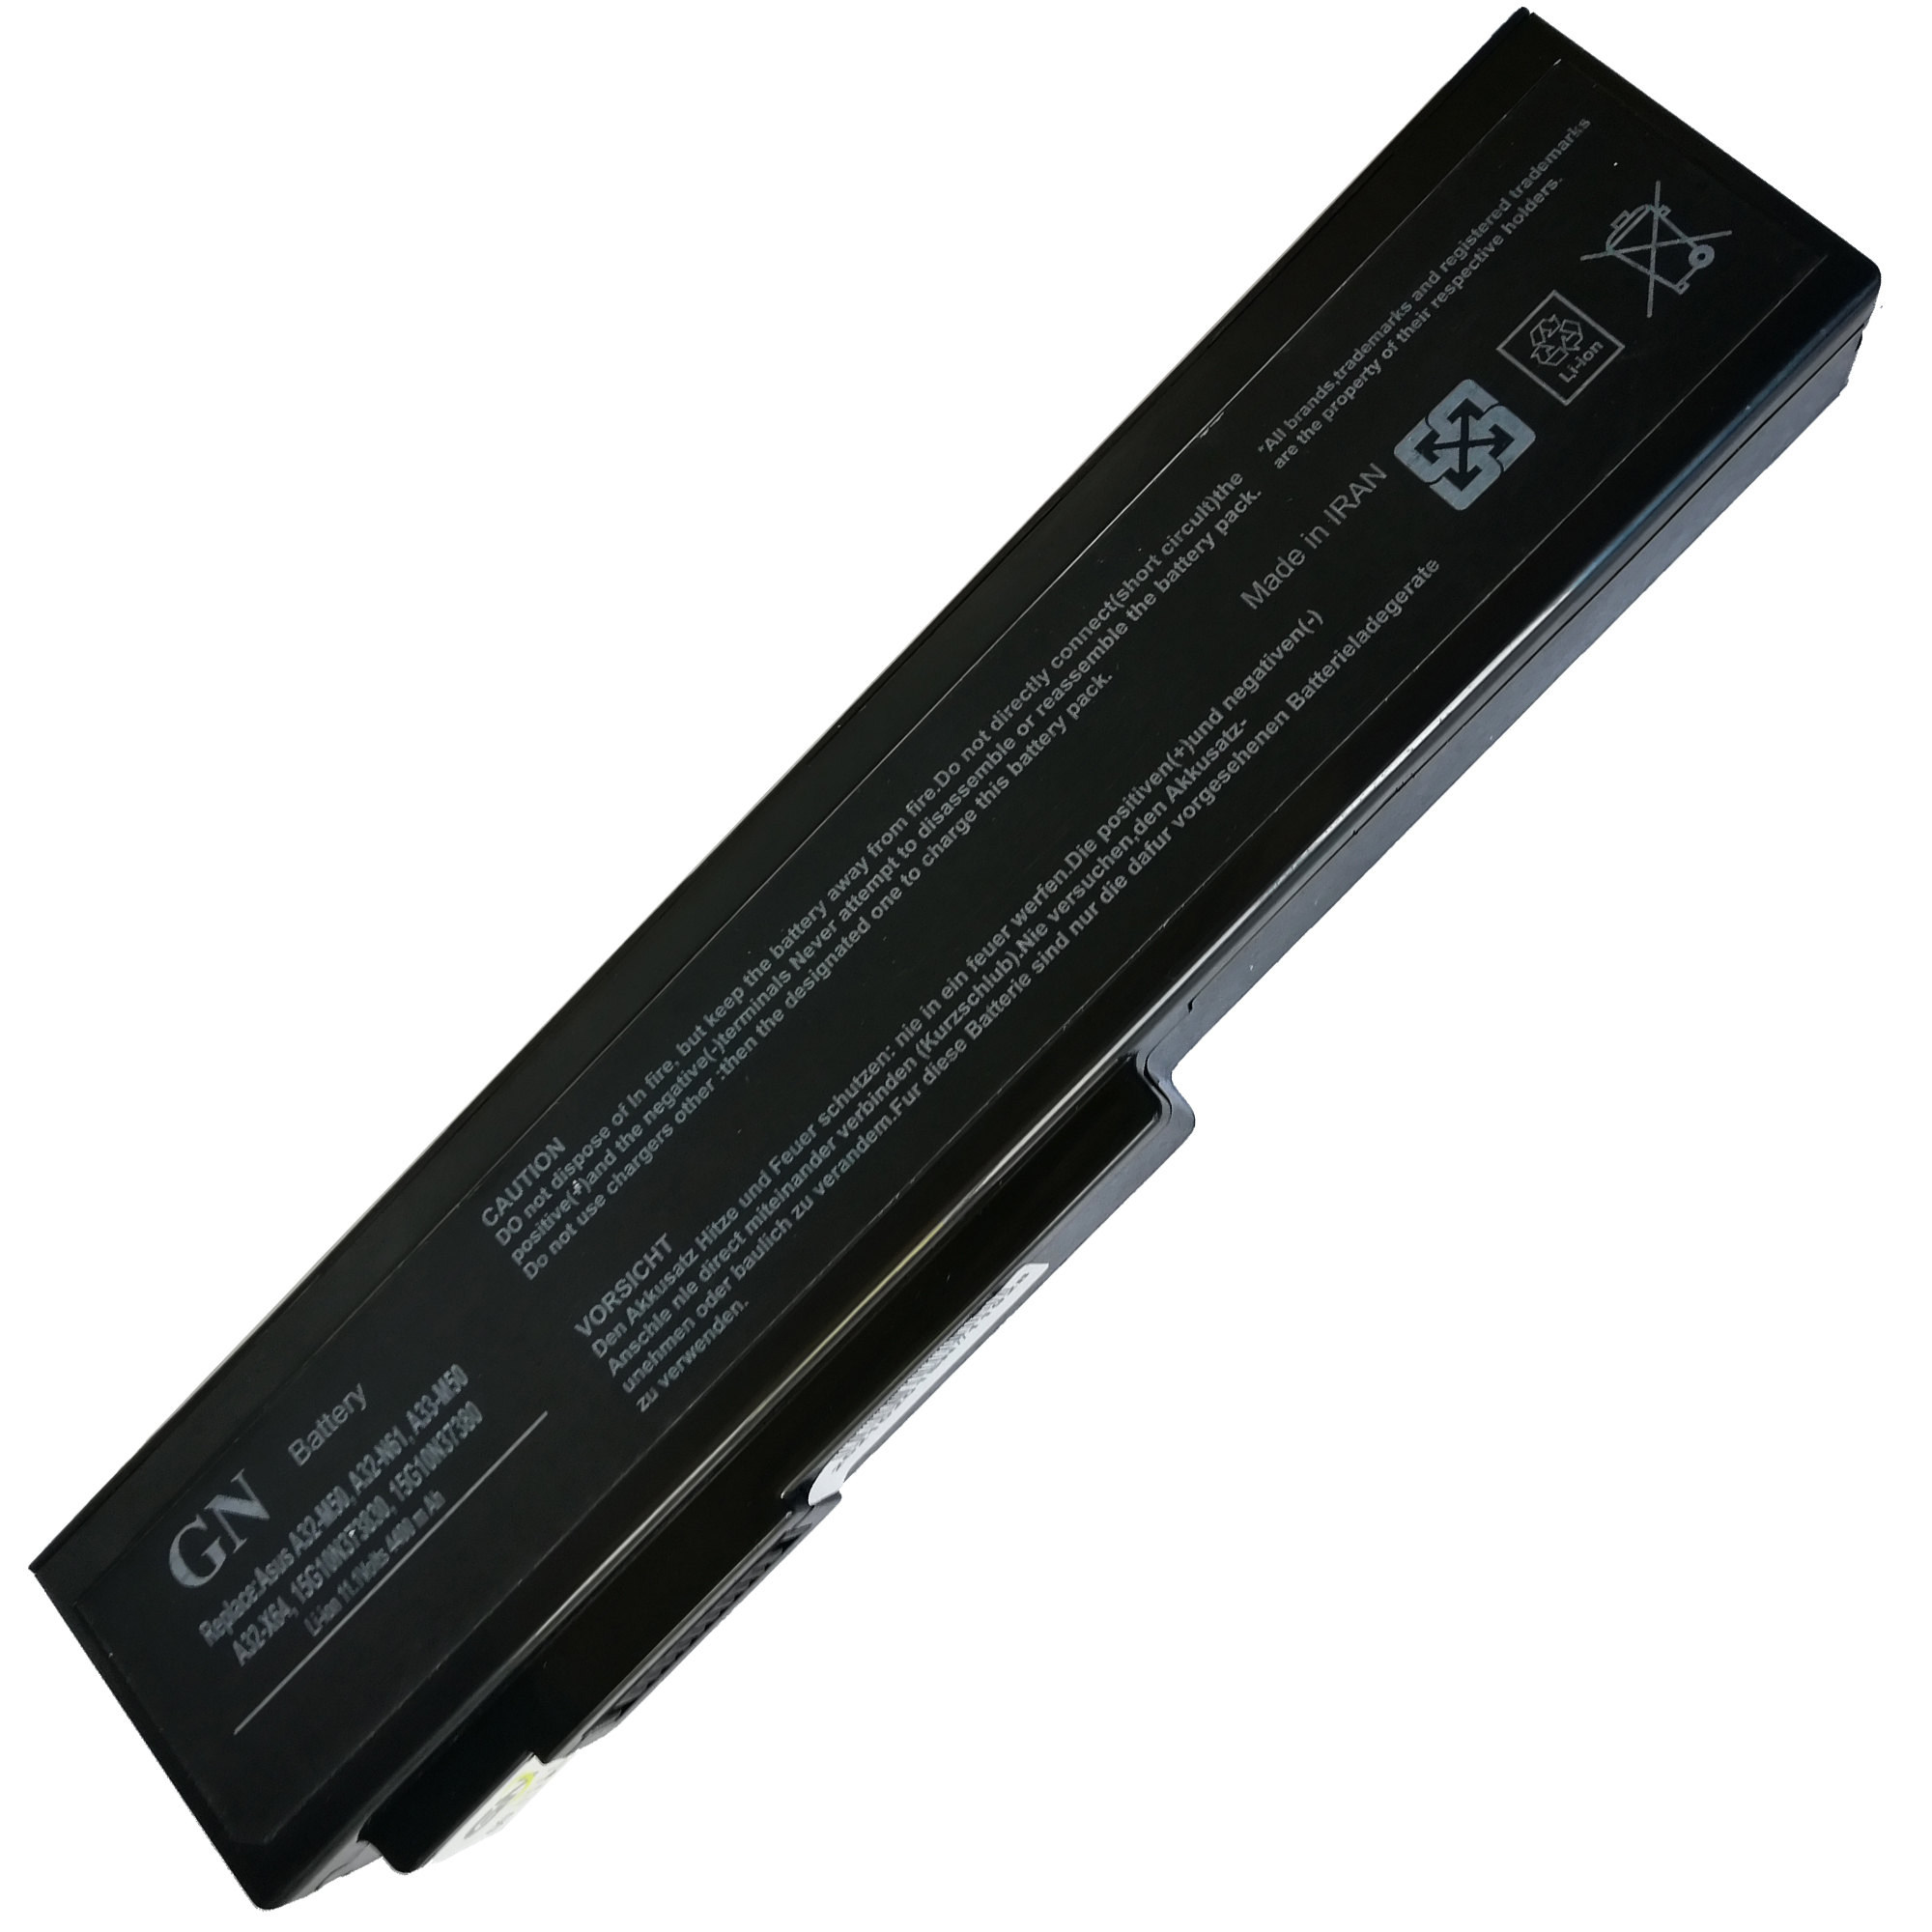 باتری لپ تاپ 6 سلولی مدل A32-N61 مناسب برای لپ تاپ ایسوس N61/M50/N43/N52